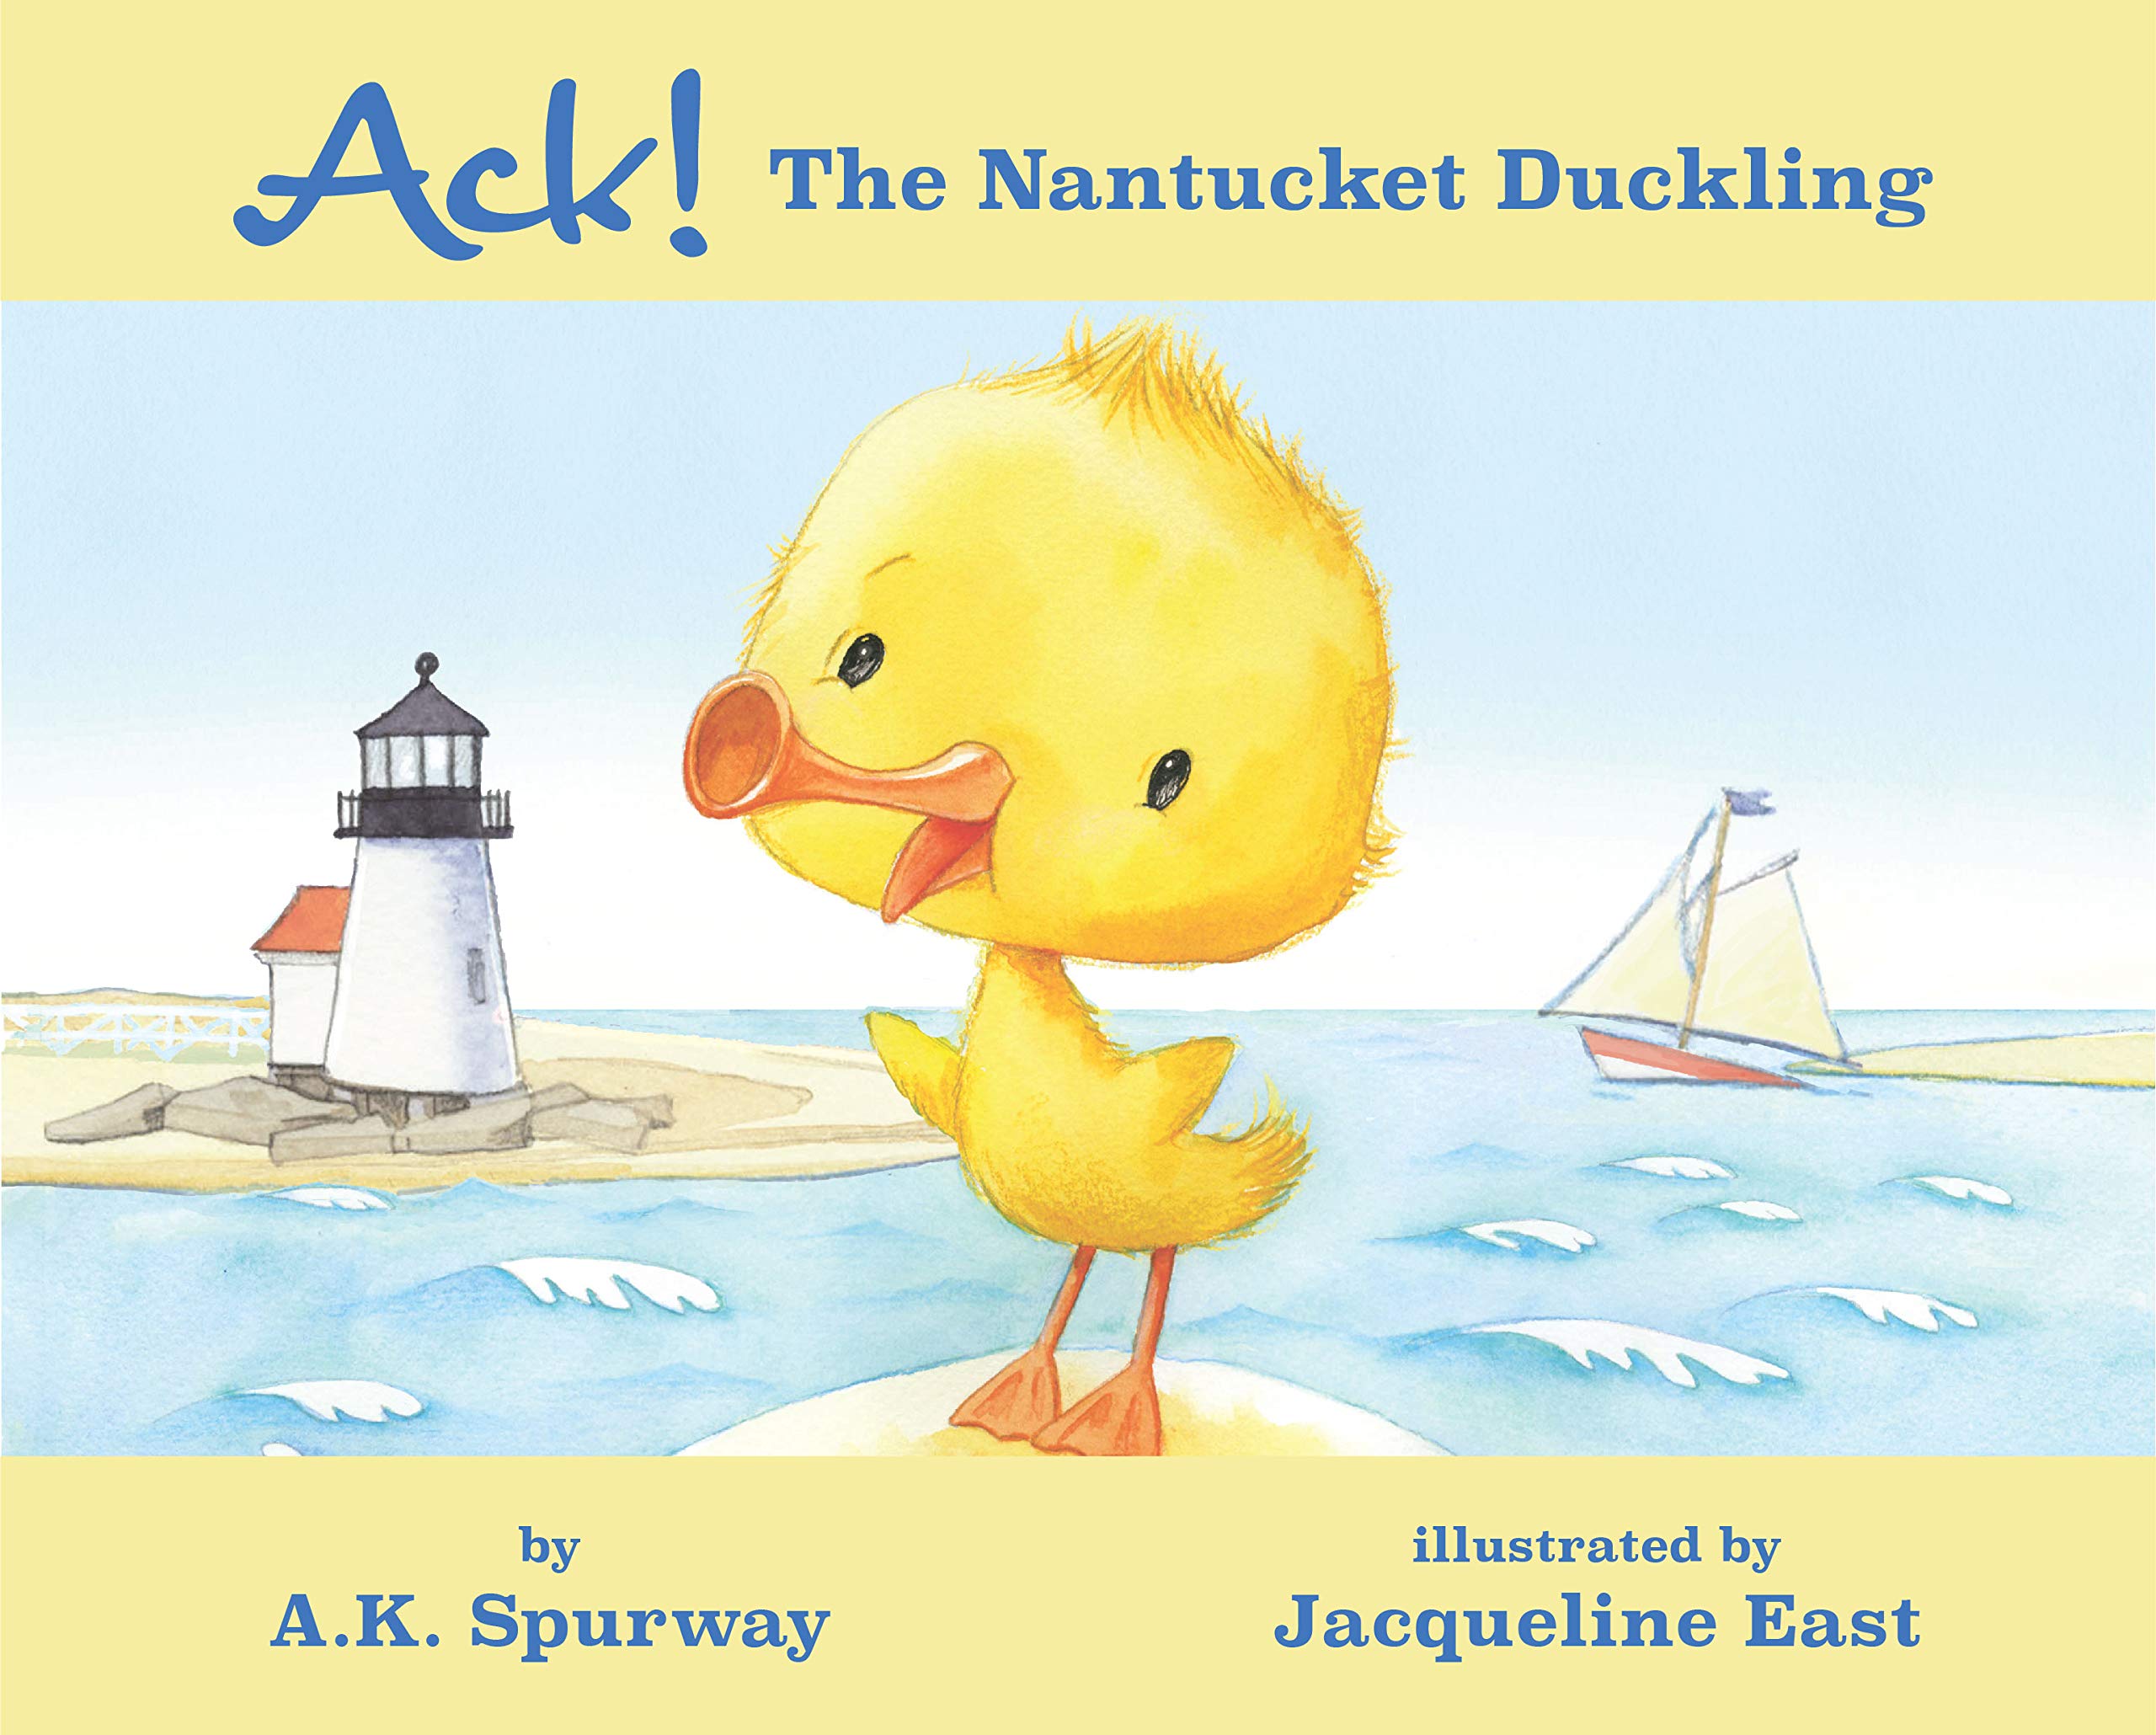 Ack! The Nantucket Duckling